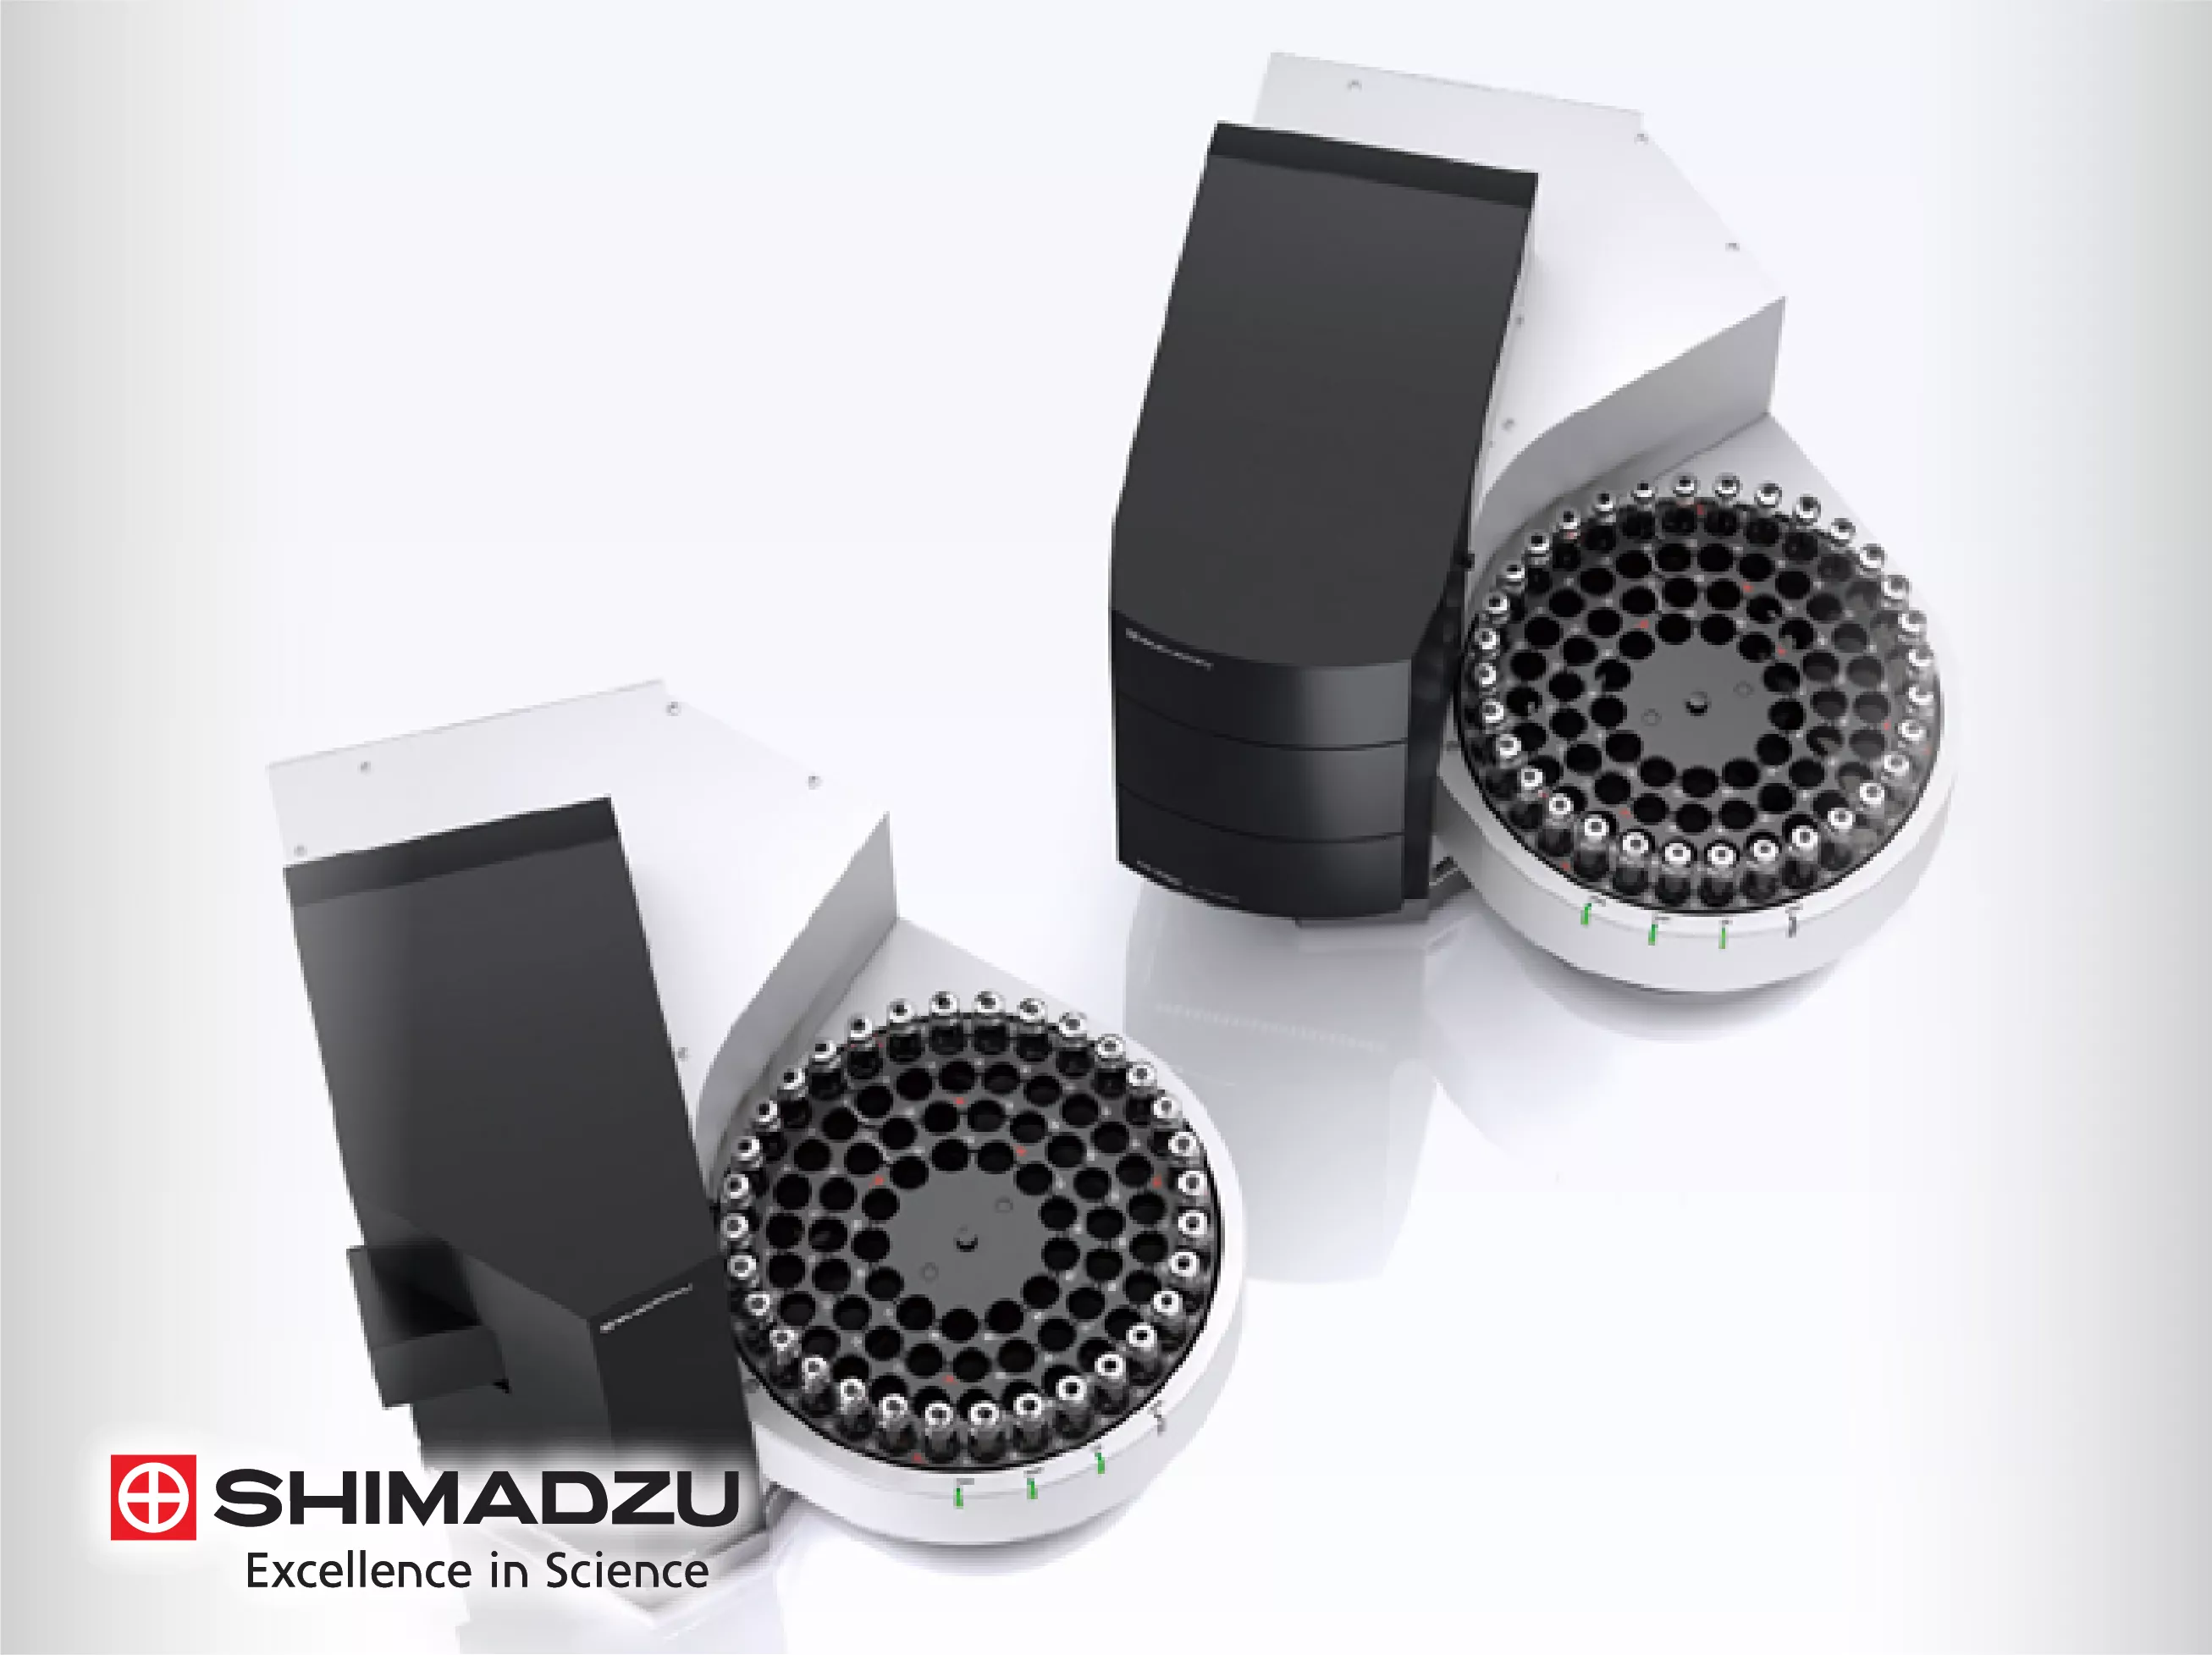 Shimdazu HS-20 NX series